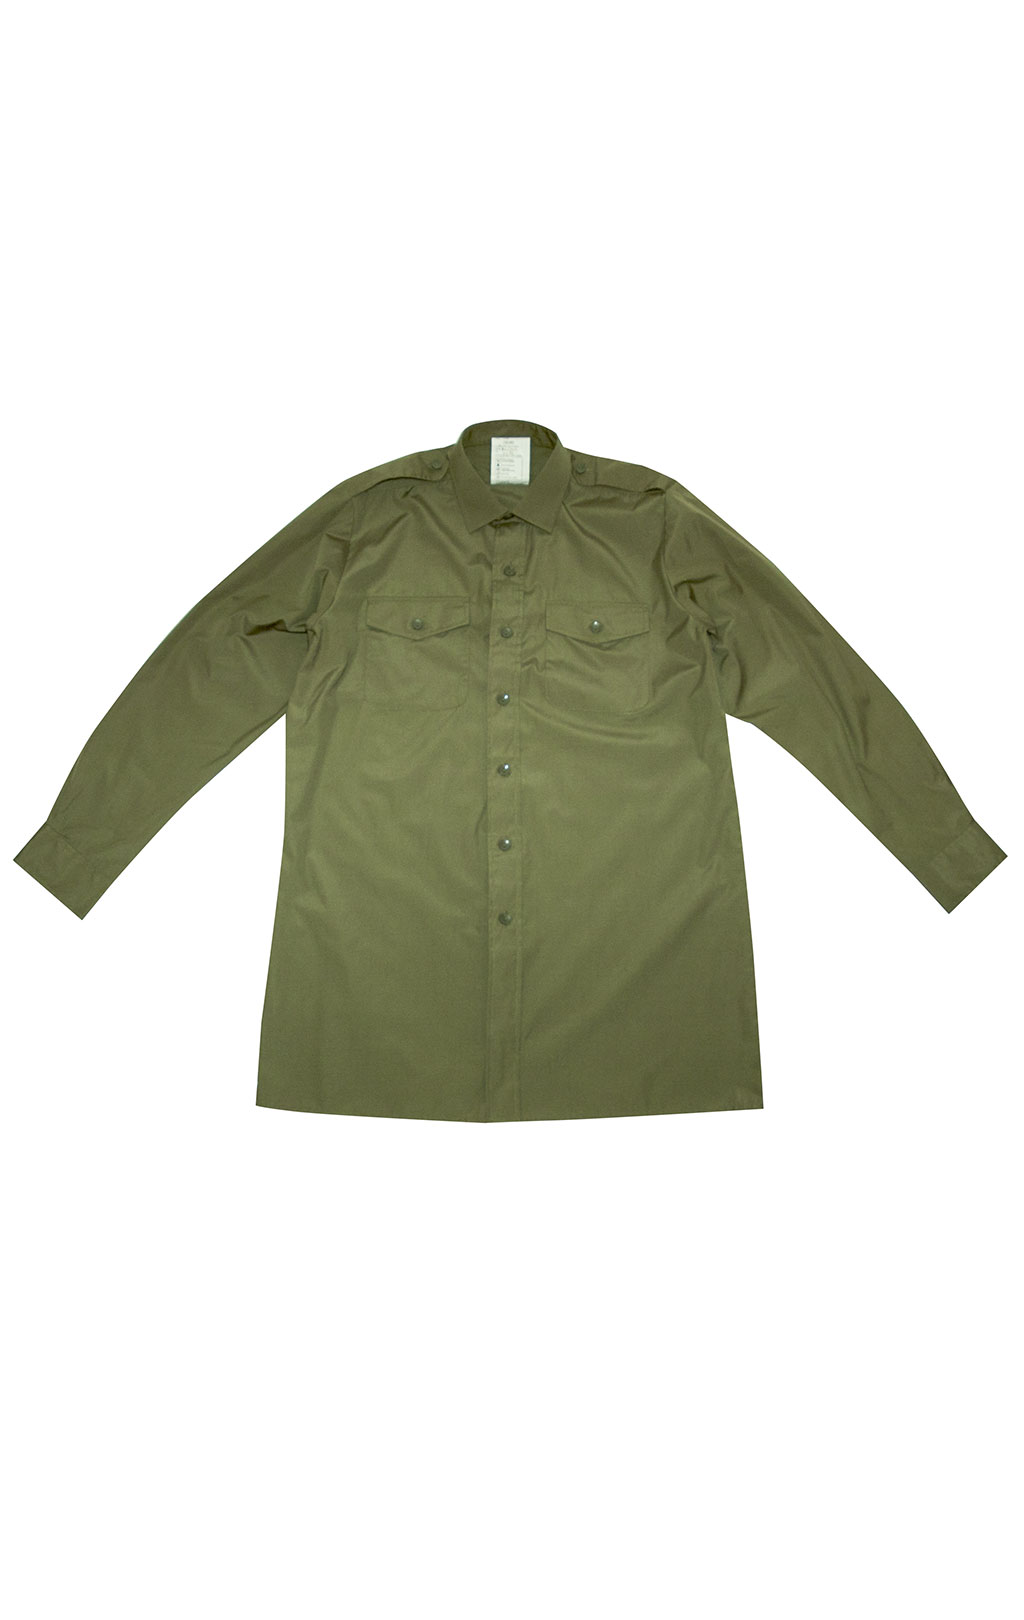 Рубашка армейская olive army б/у Англия